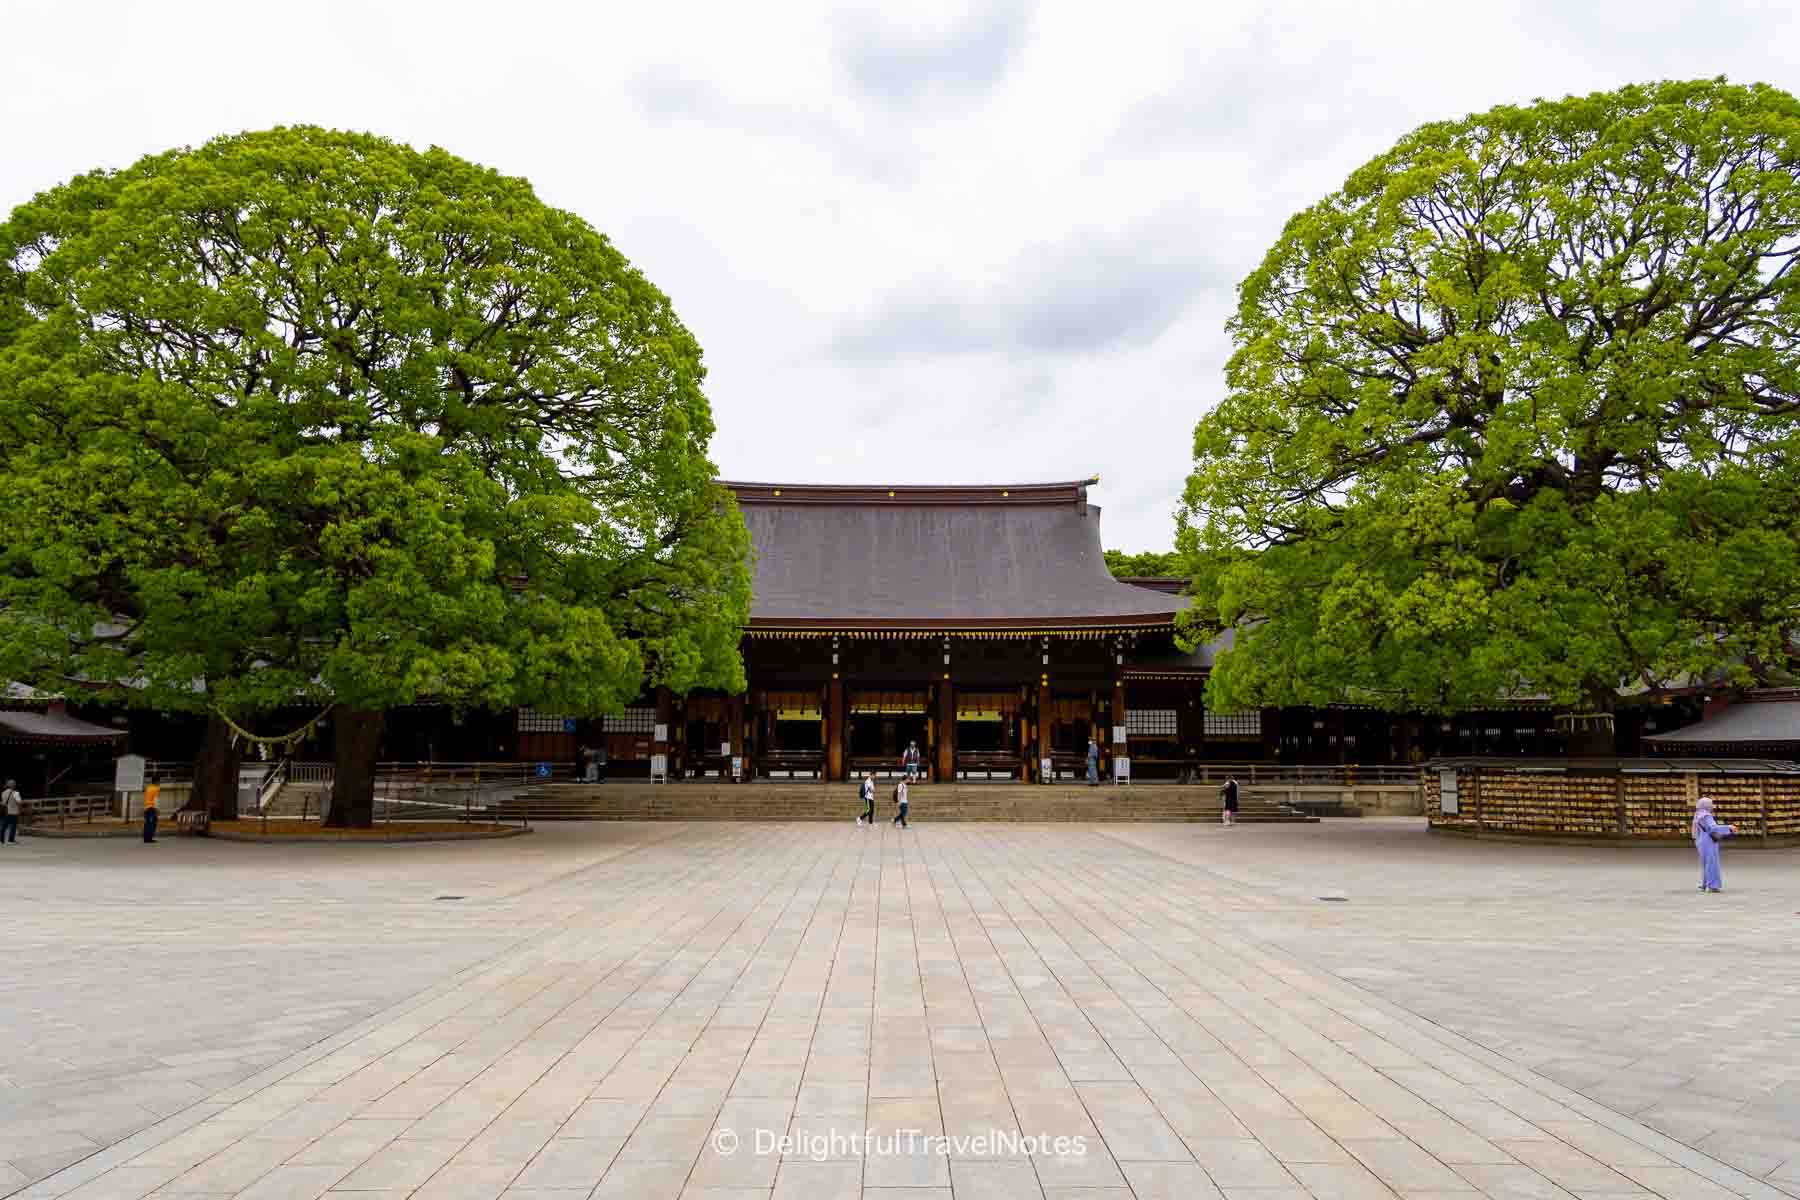 the main shrine complex courtyard of Meiji Jingu.